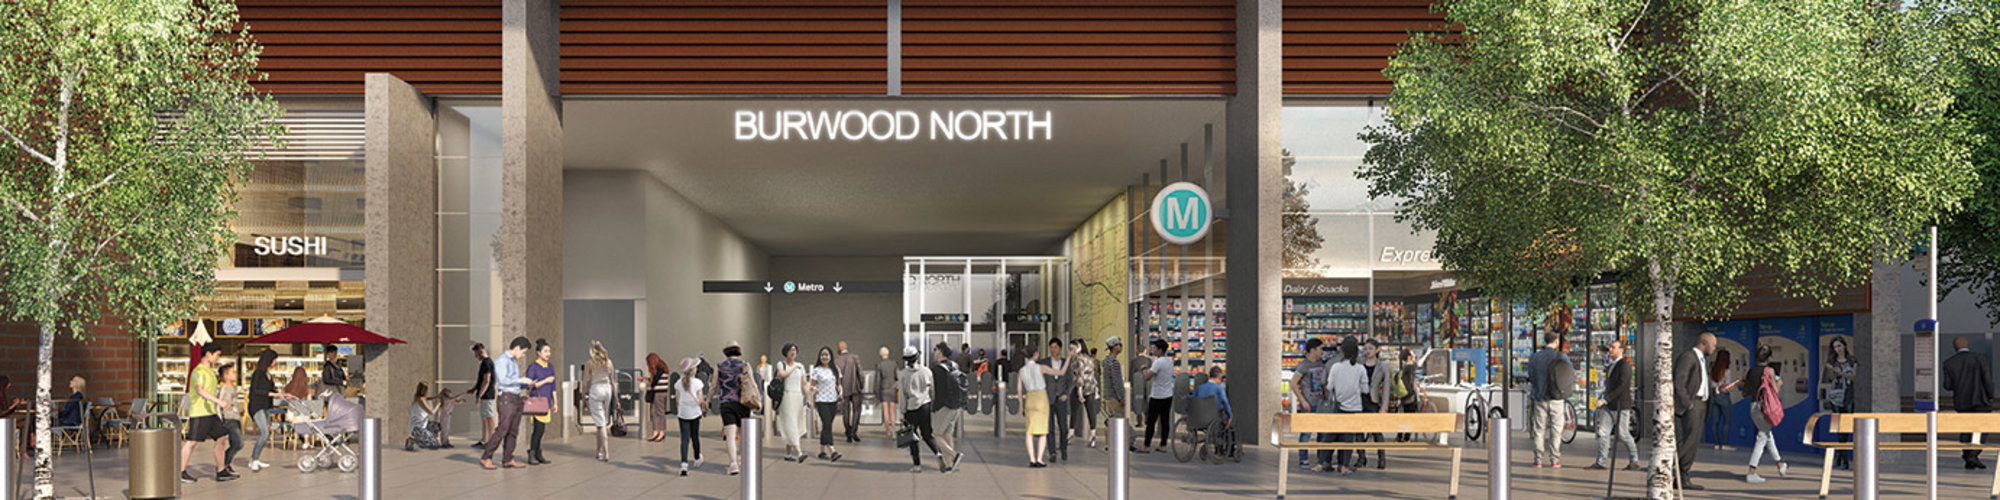 Artist’s impression of Burwood North Station